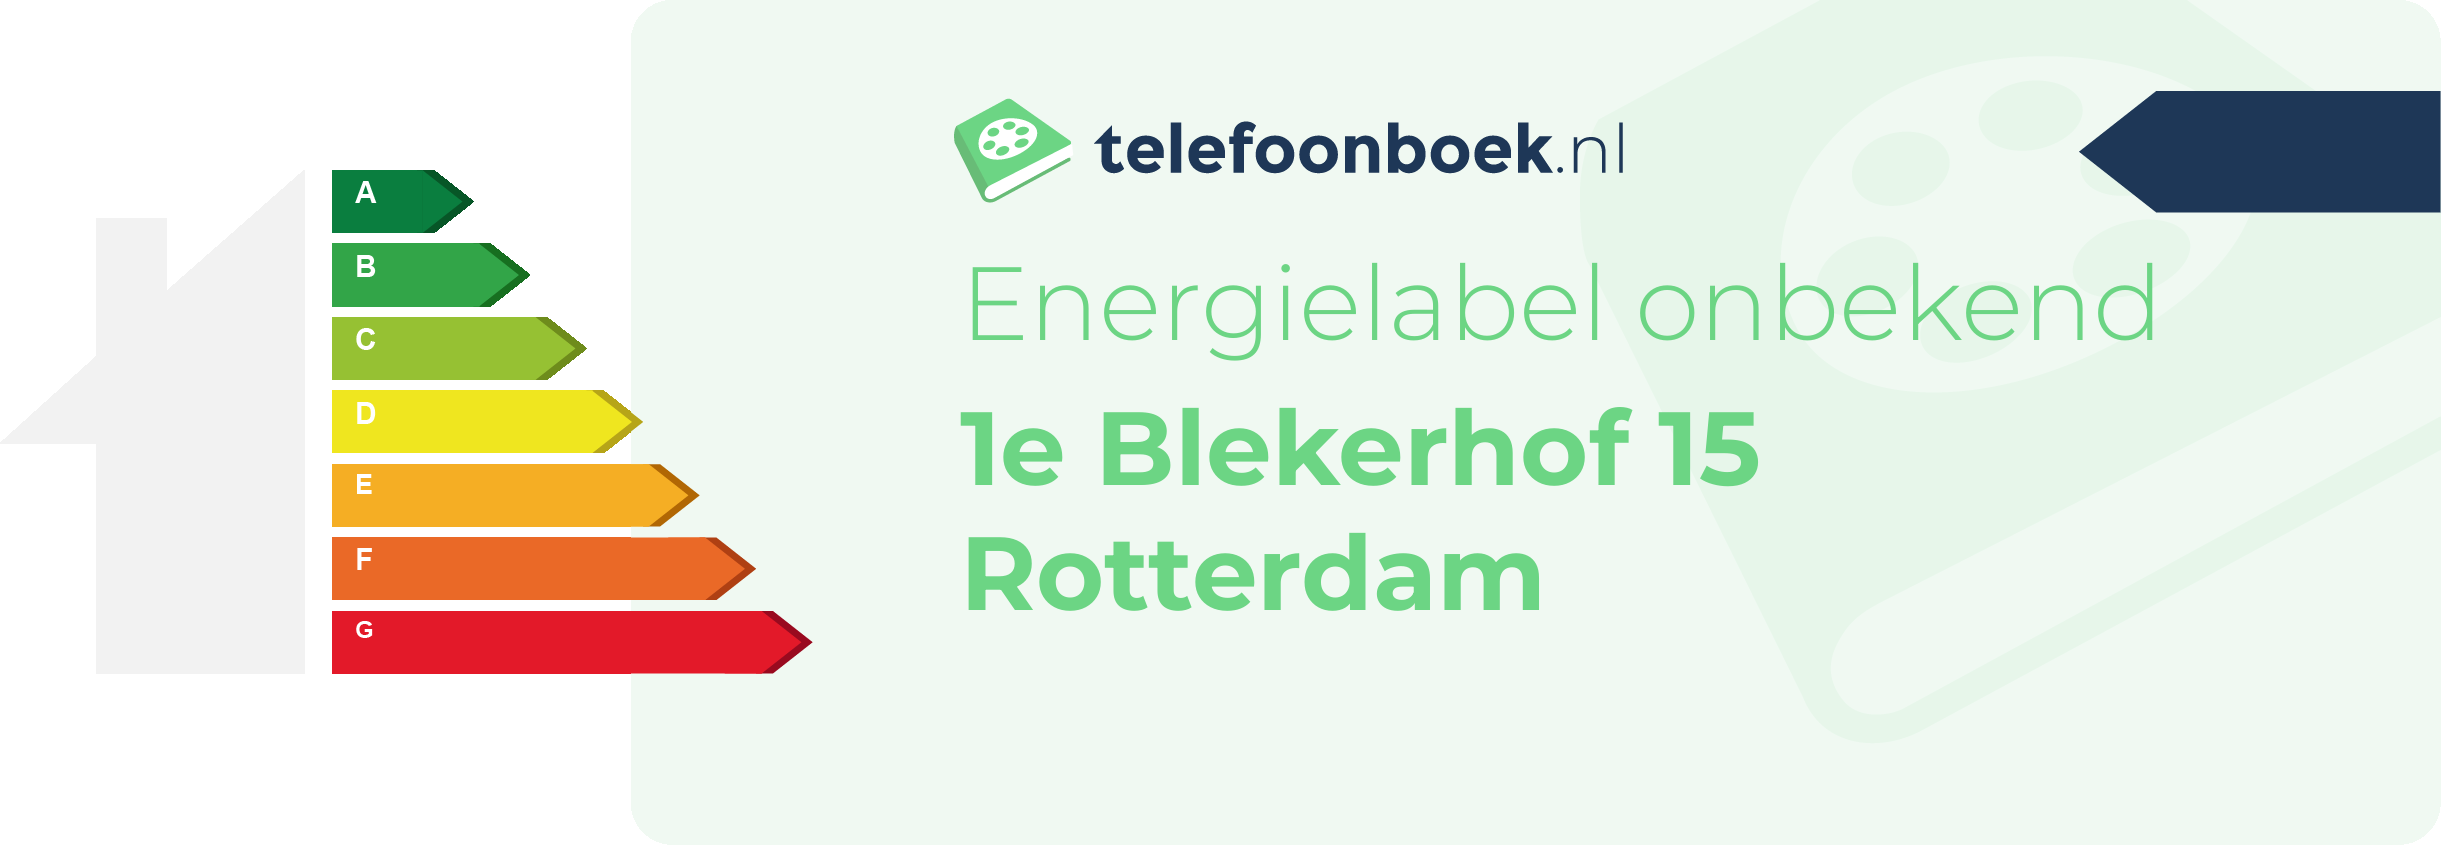 Energielabel 1e Blekerhof 15 Rotterdam